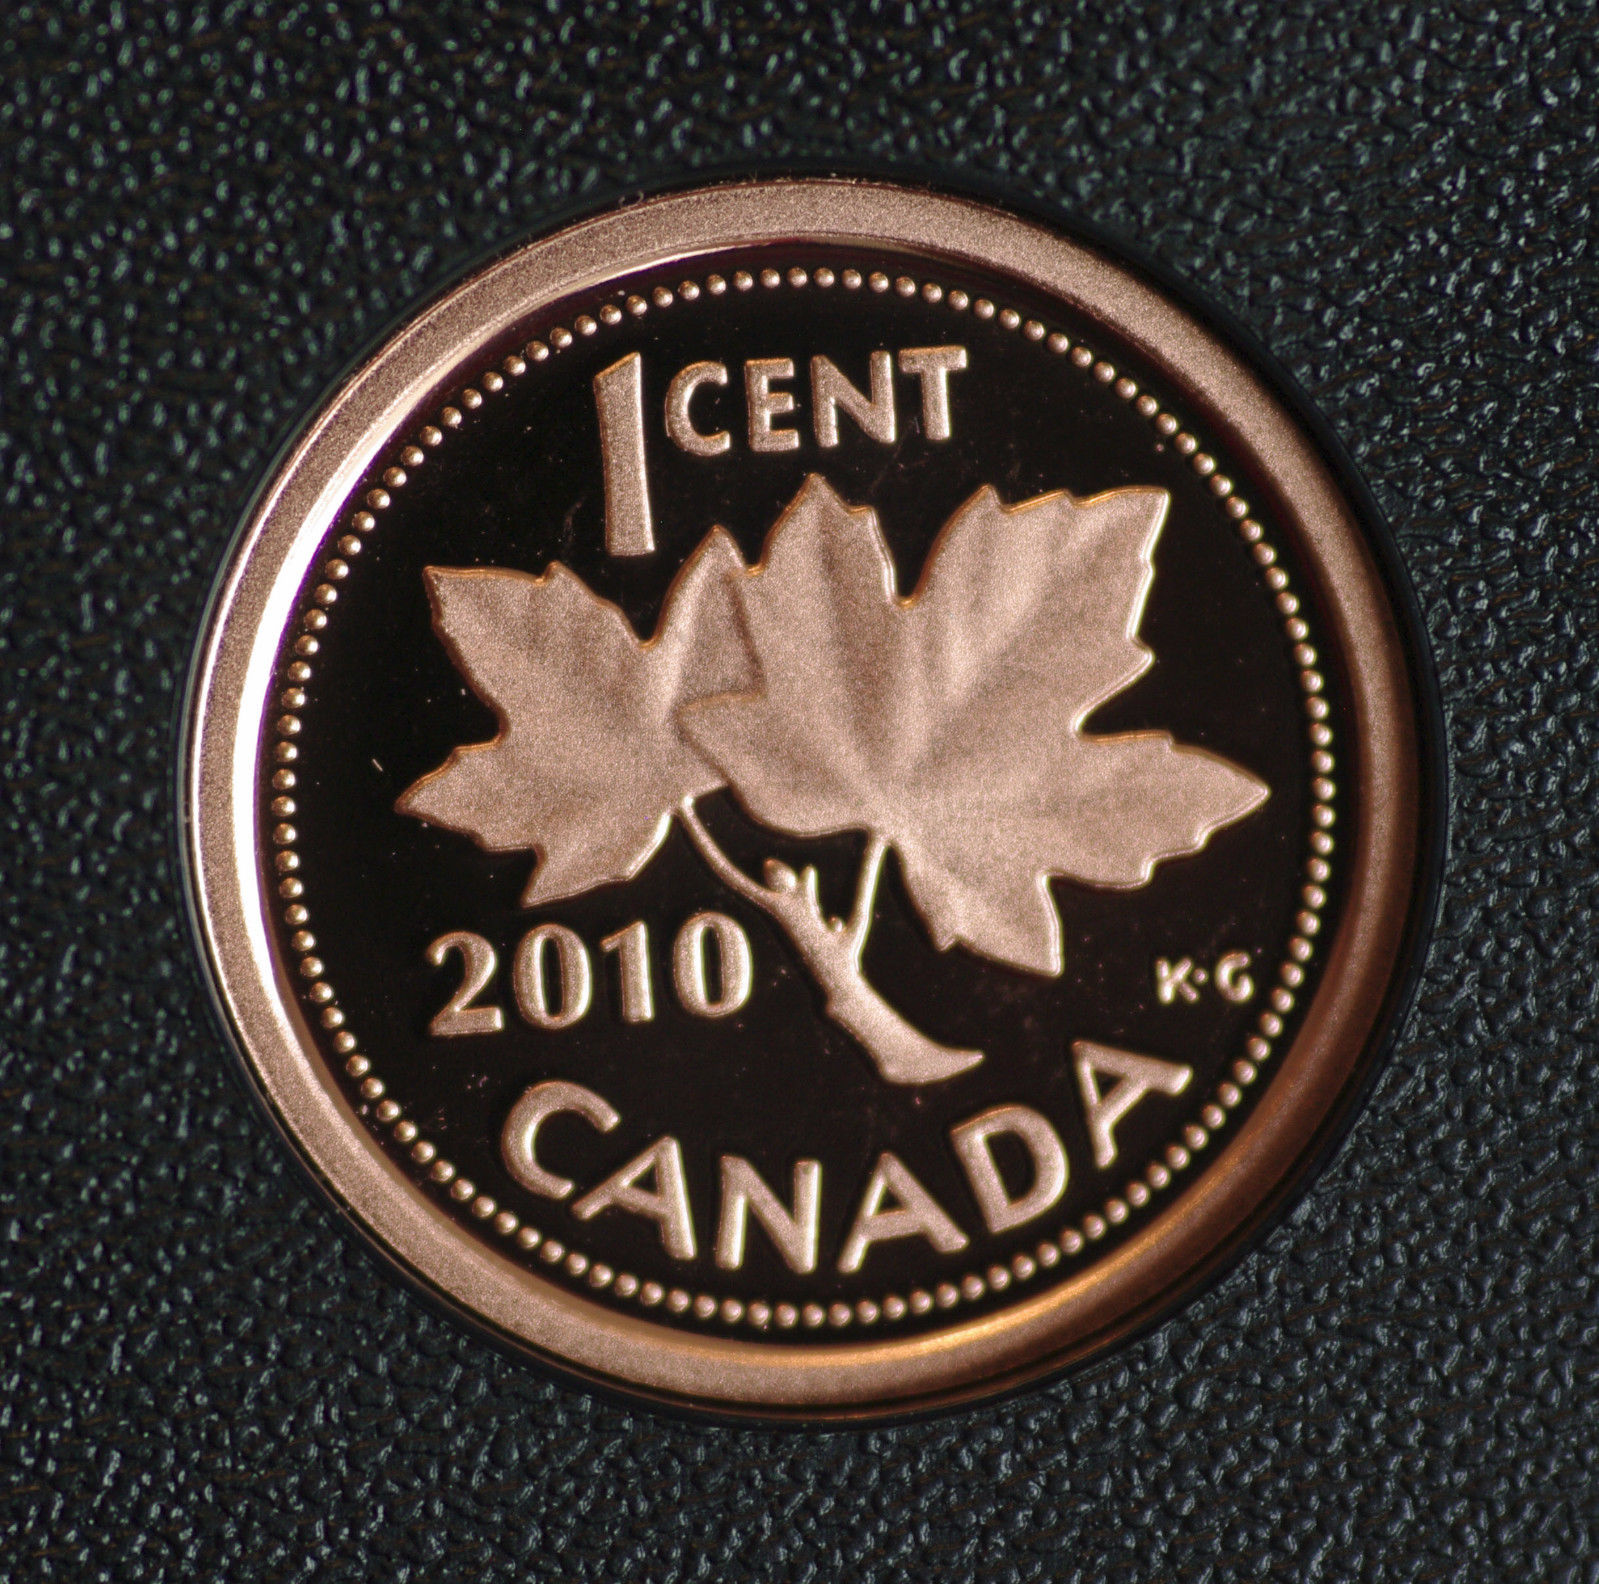 2010 Canada Classic design 1 cent coin in pure copper-  in proof finish